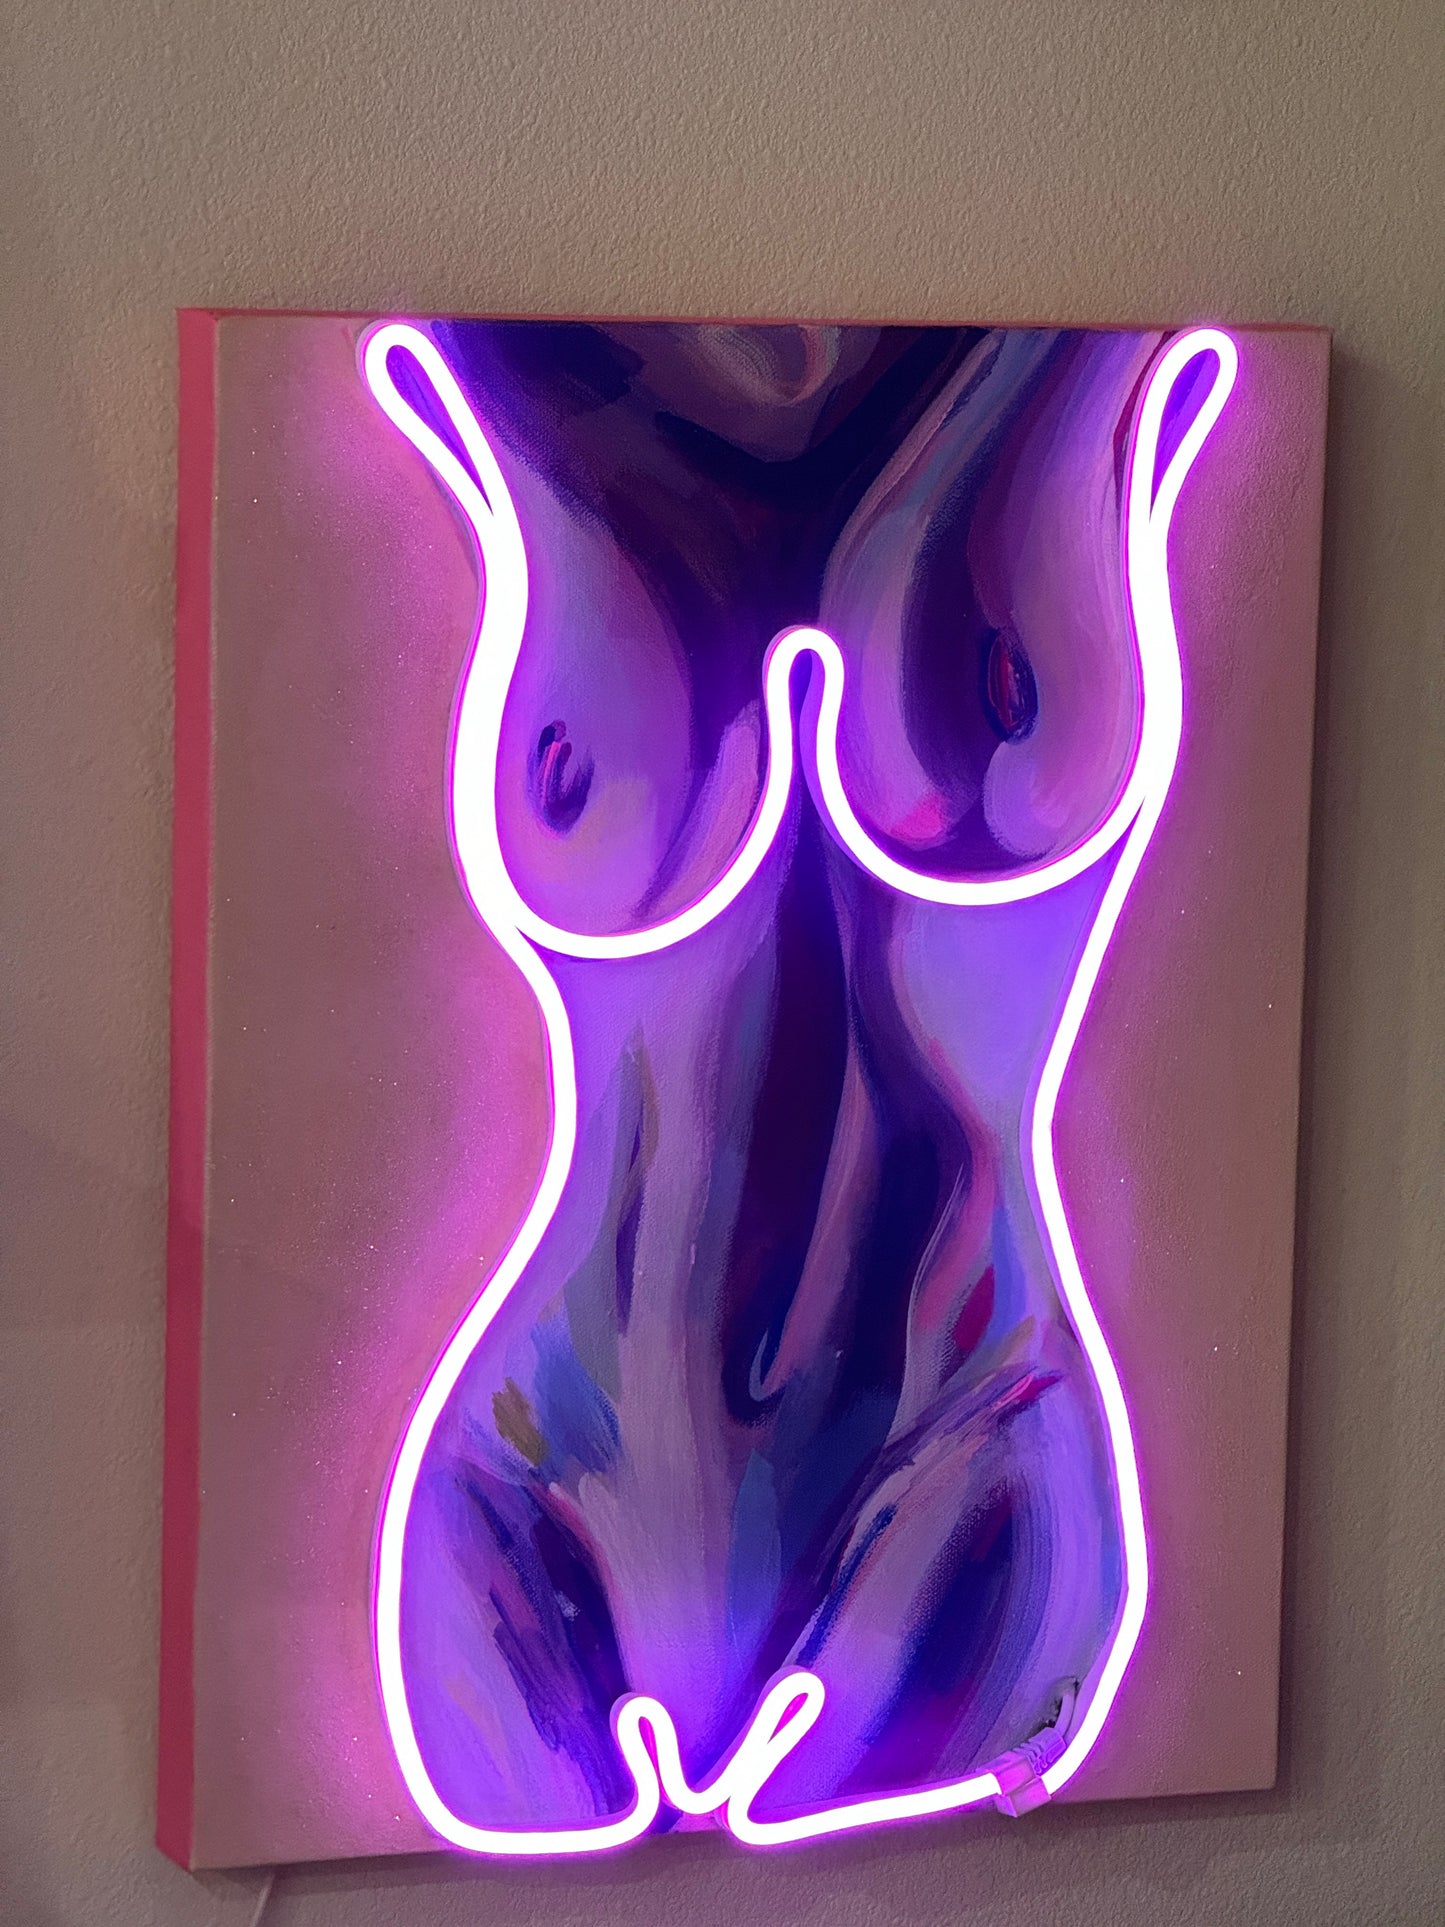 Neon Body Painting 14x17 canvas acrylic